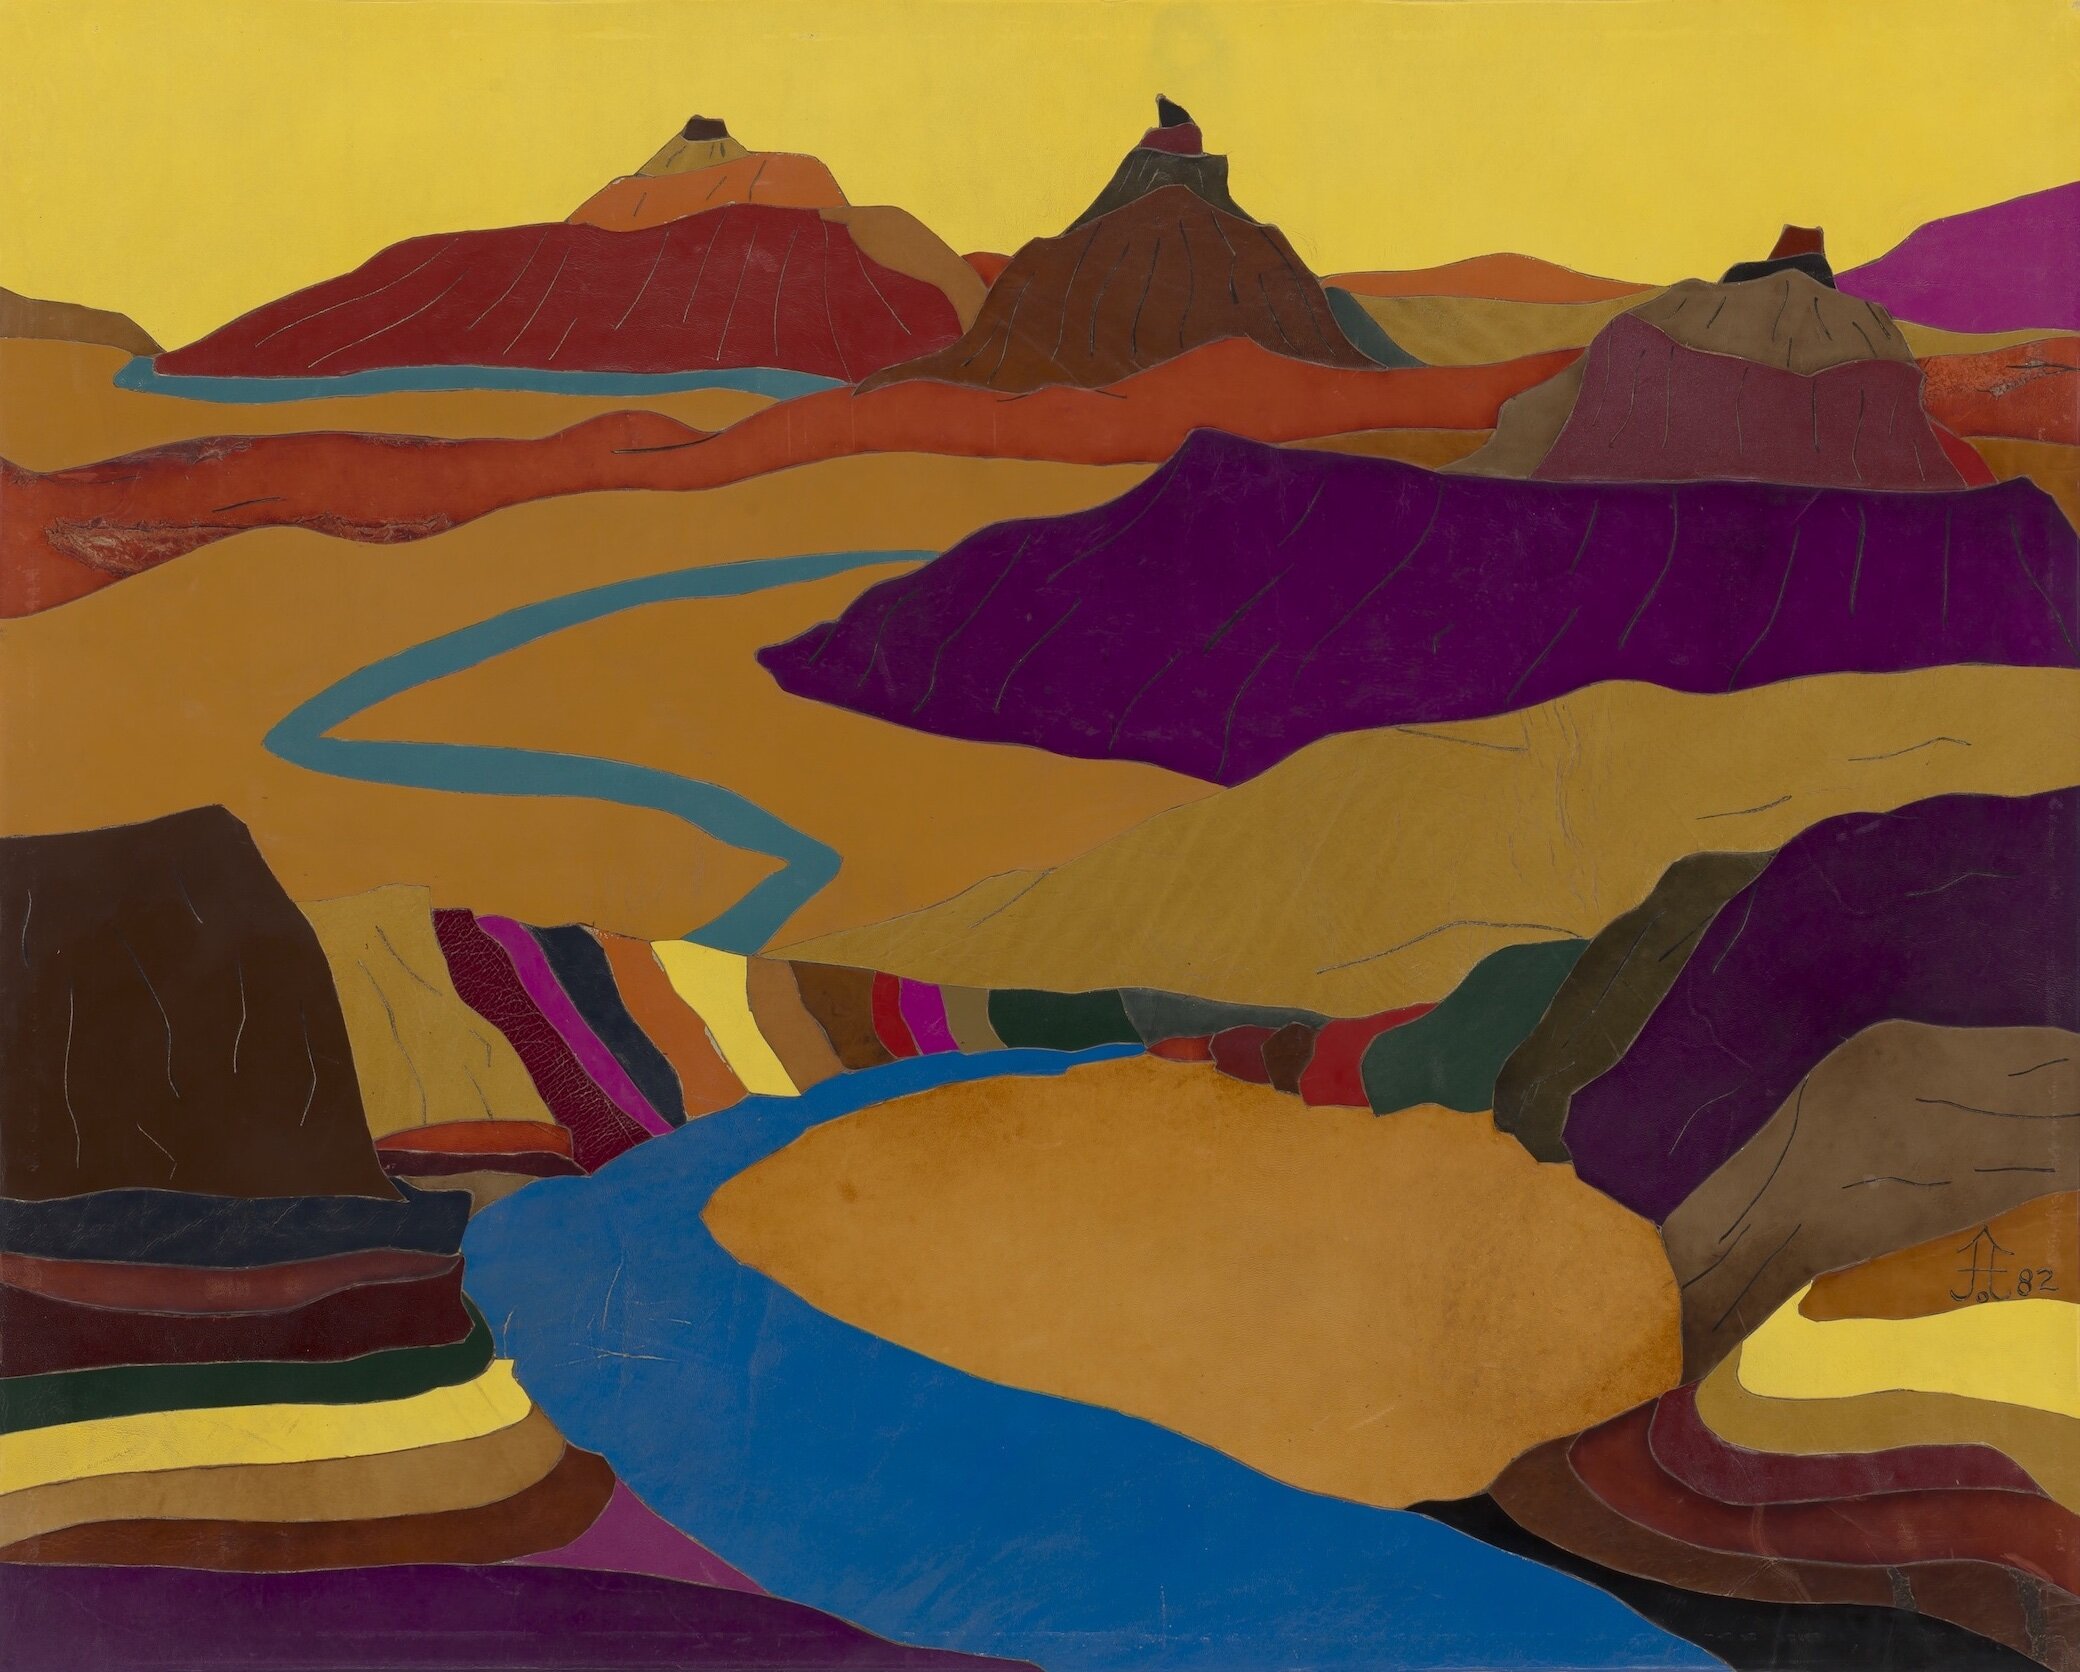 Scene of a blue river meandering through a multicolored, mountainous desert landscape.